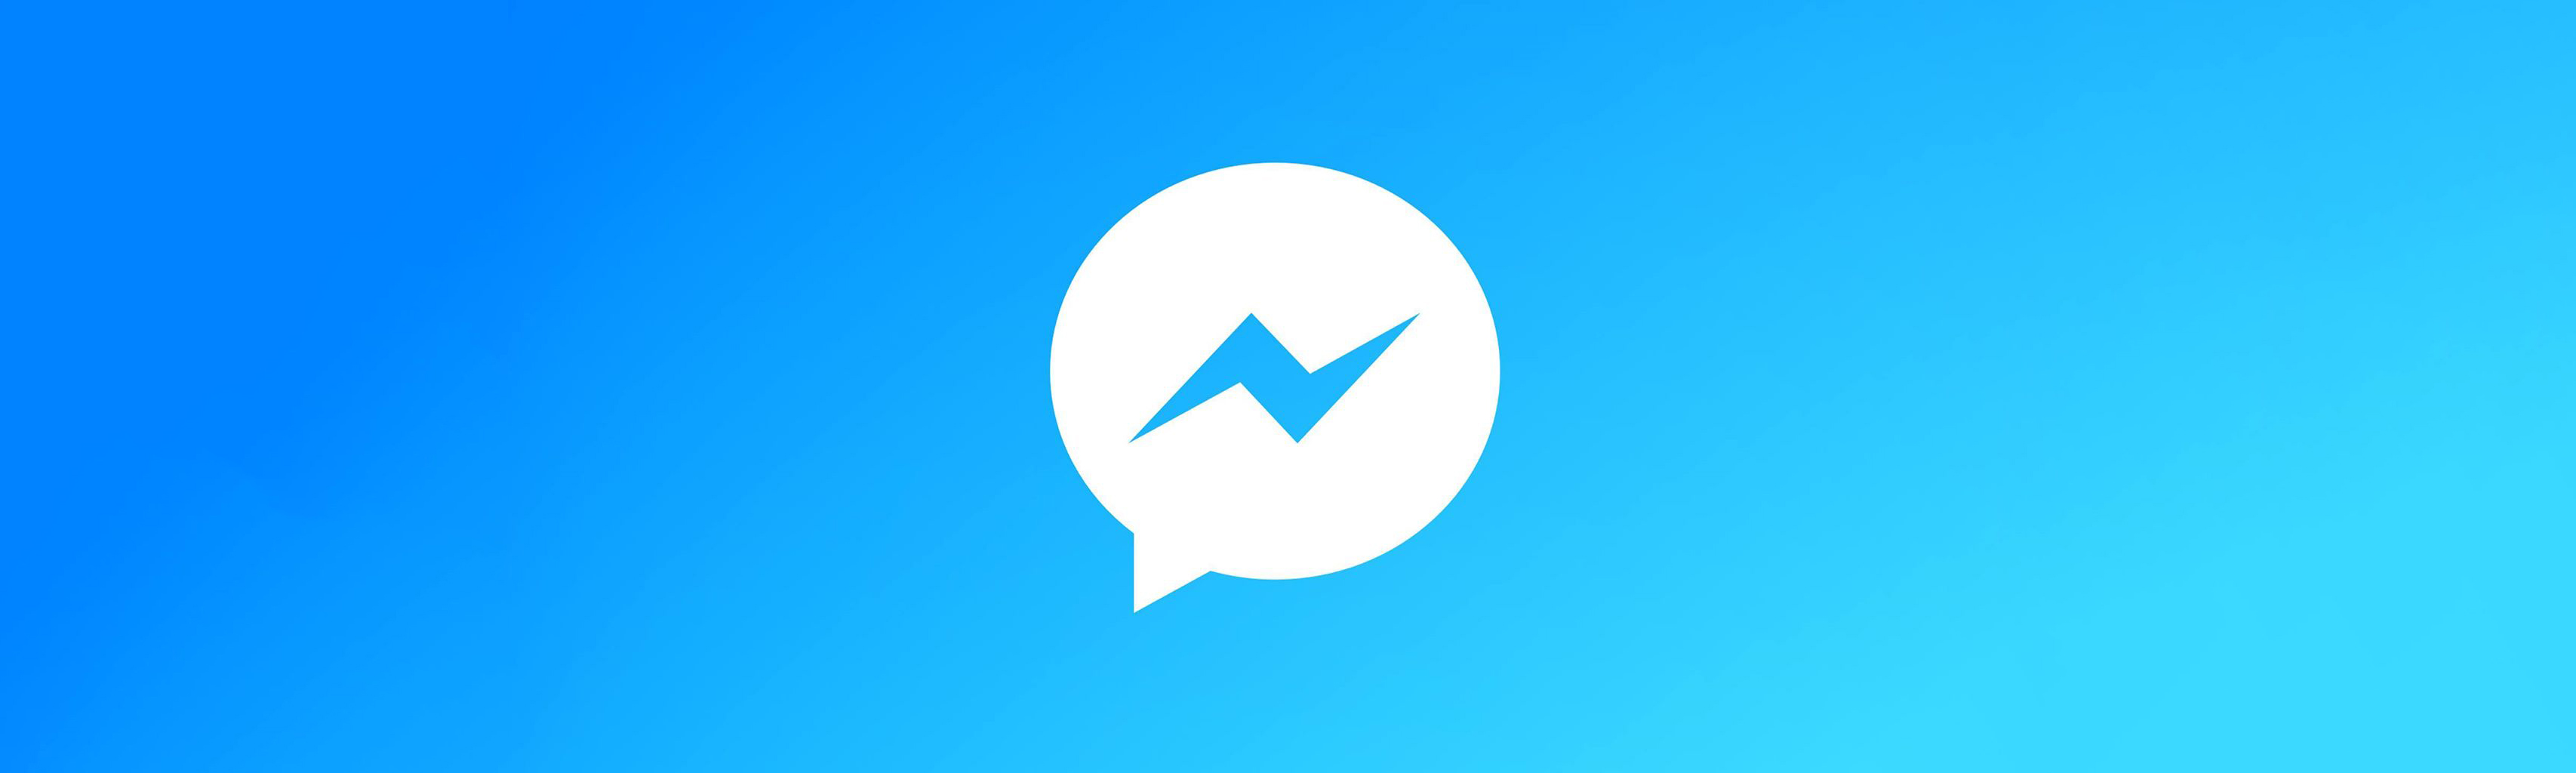 Migrating Messenger Storage To Optimize Performance Facebook